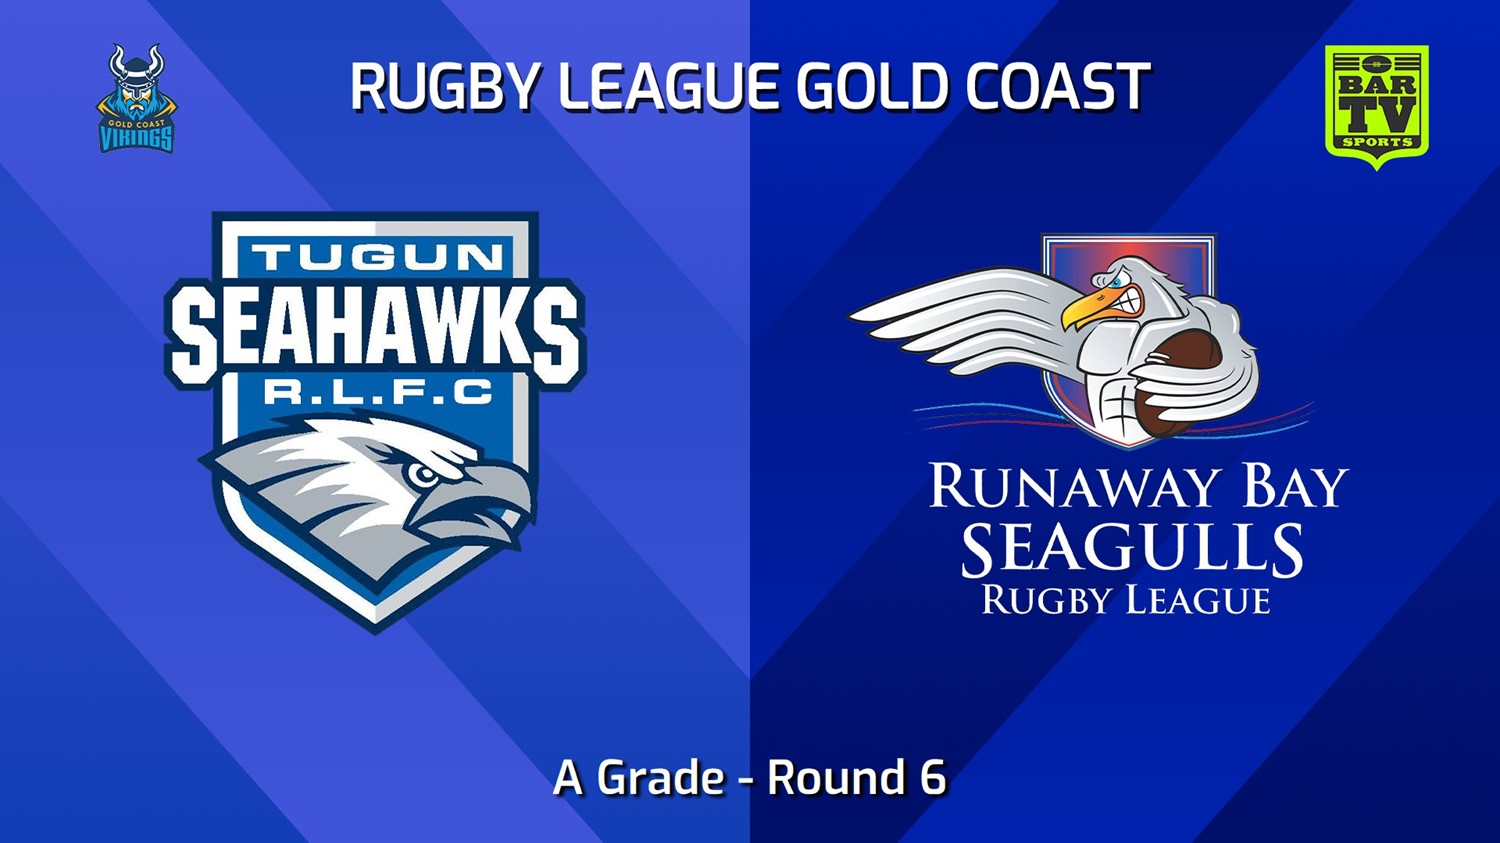 240601-video-Gold Coast Round 6 - A Grade - Tugun Seahawks v Runaway Bay Seagulls Slate Image